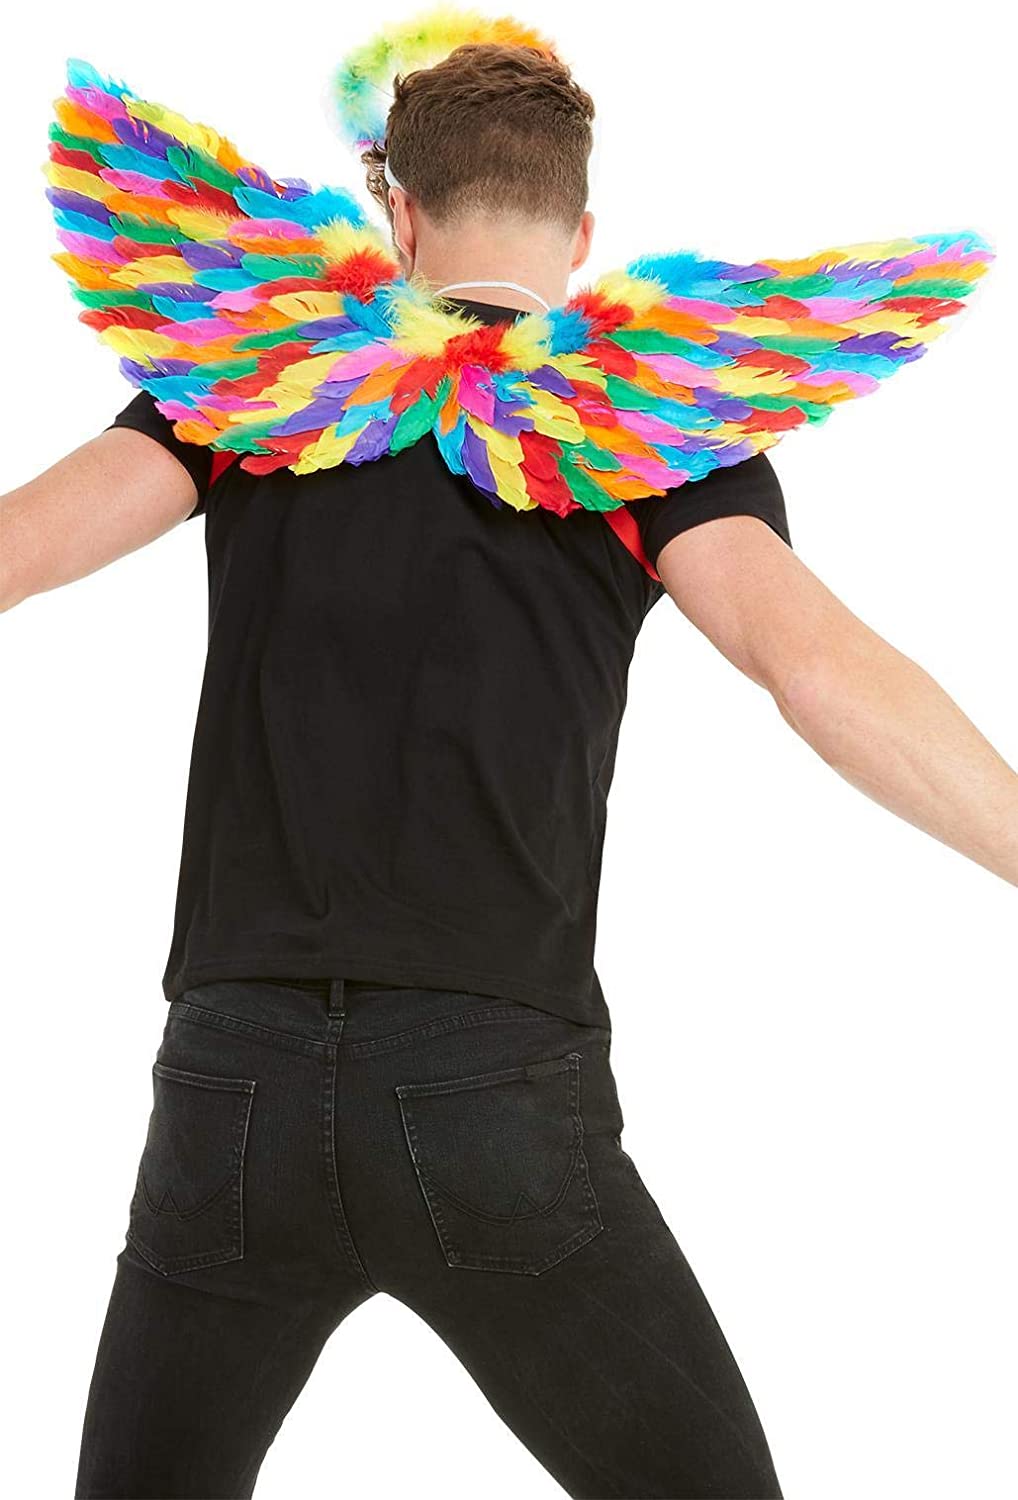 Smiffys 51000 Rainbow Feather Wings, Unisex Adult, Multi-Colour